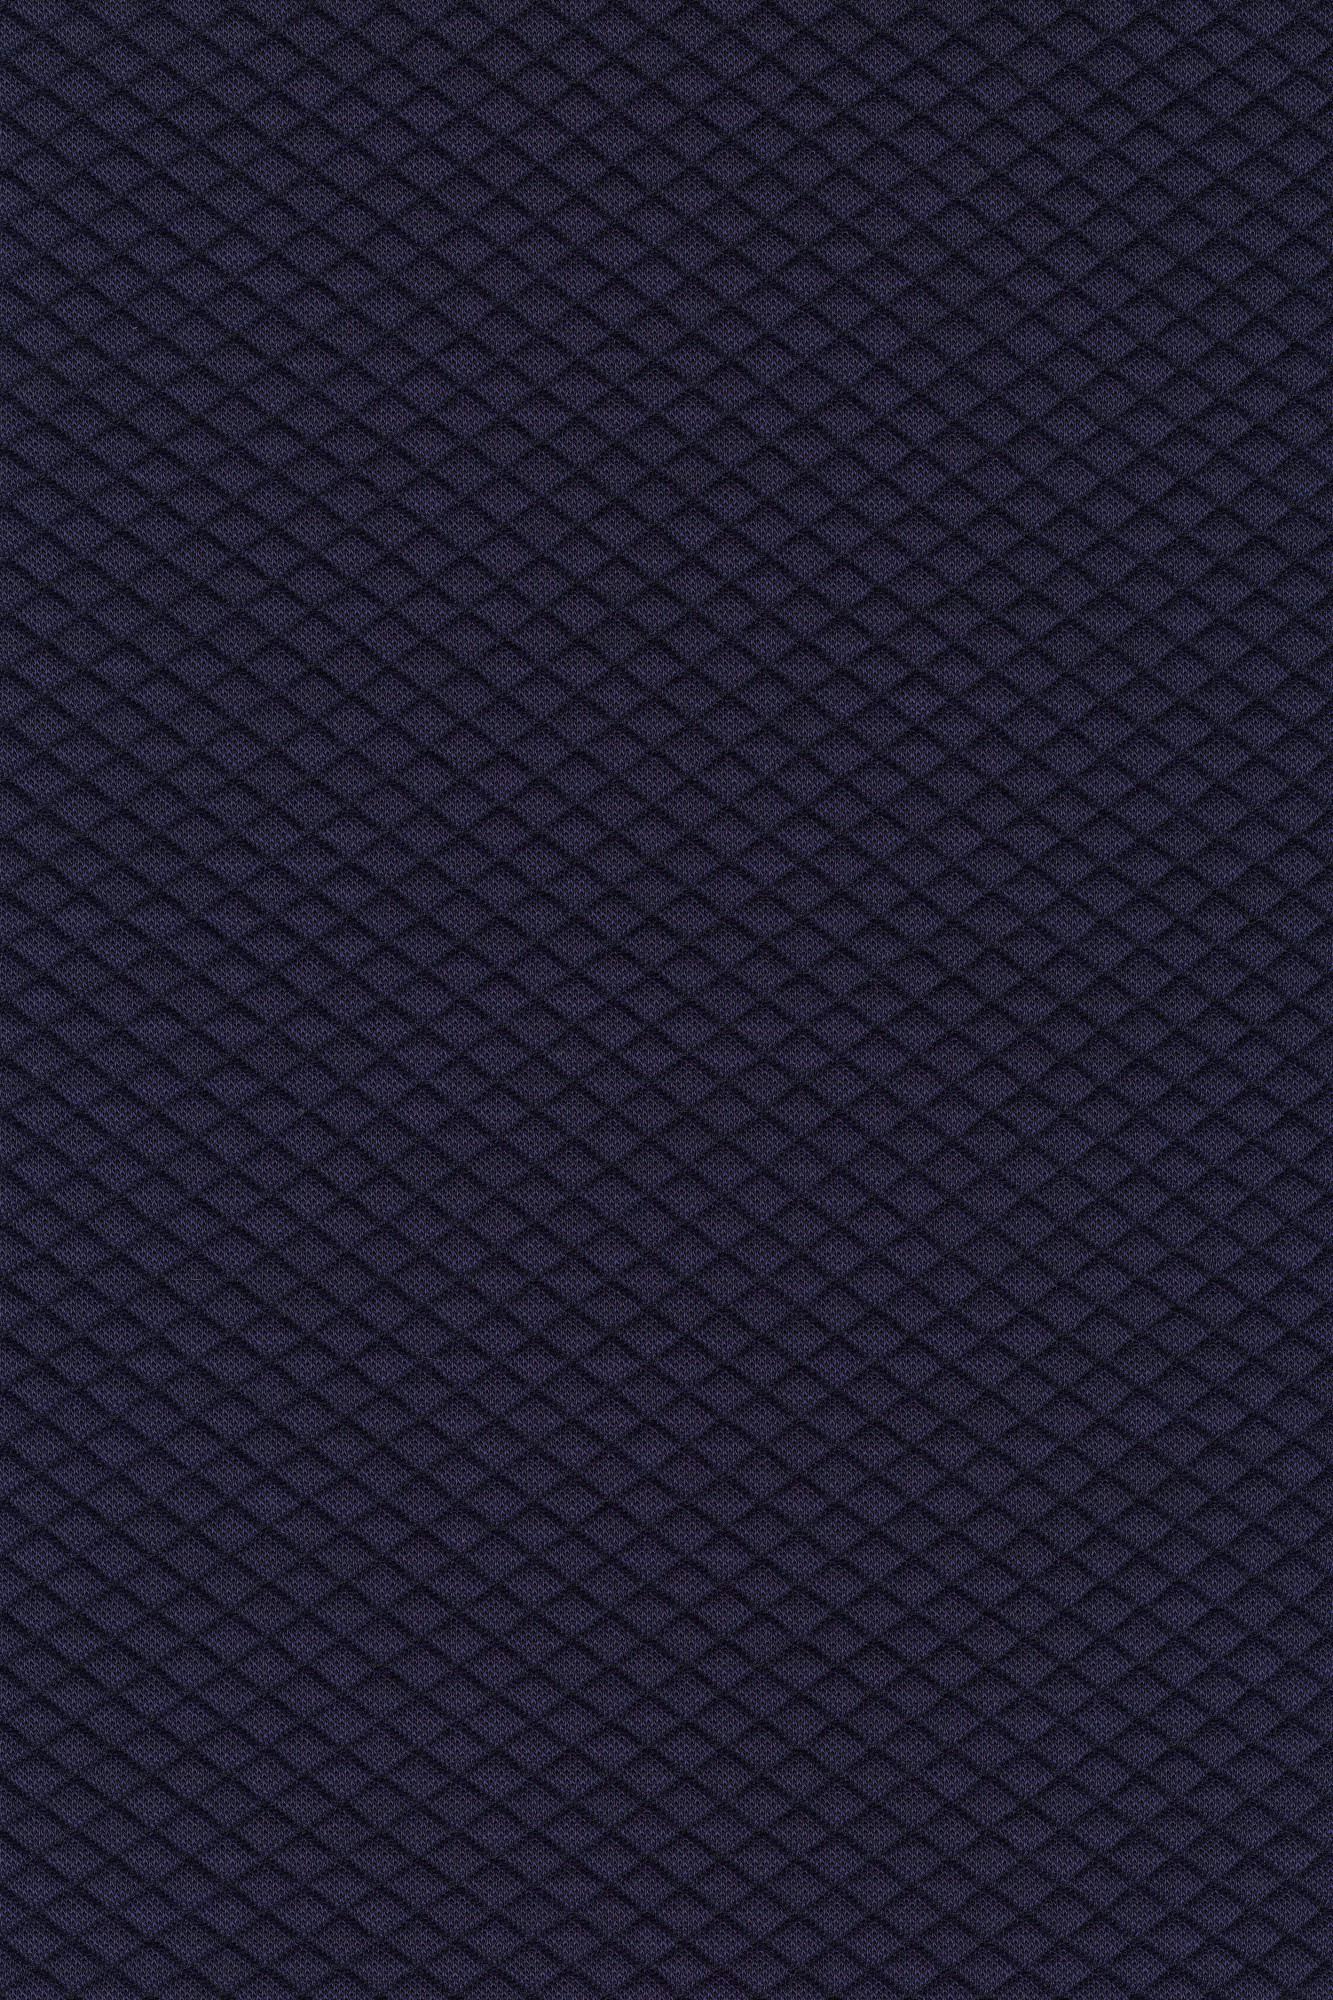 Fabric sample Mosaic 2 0672 purple